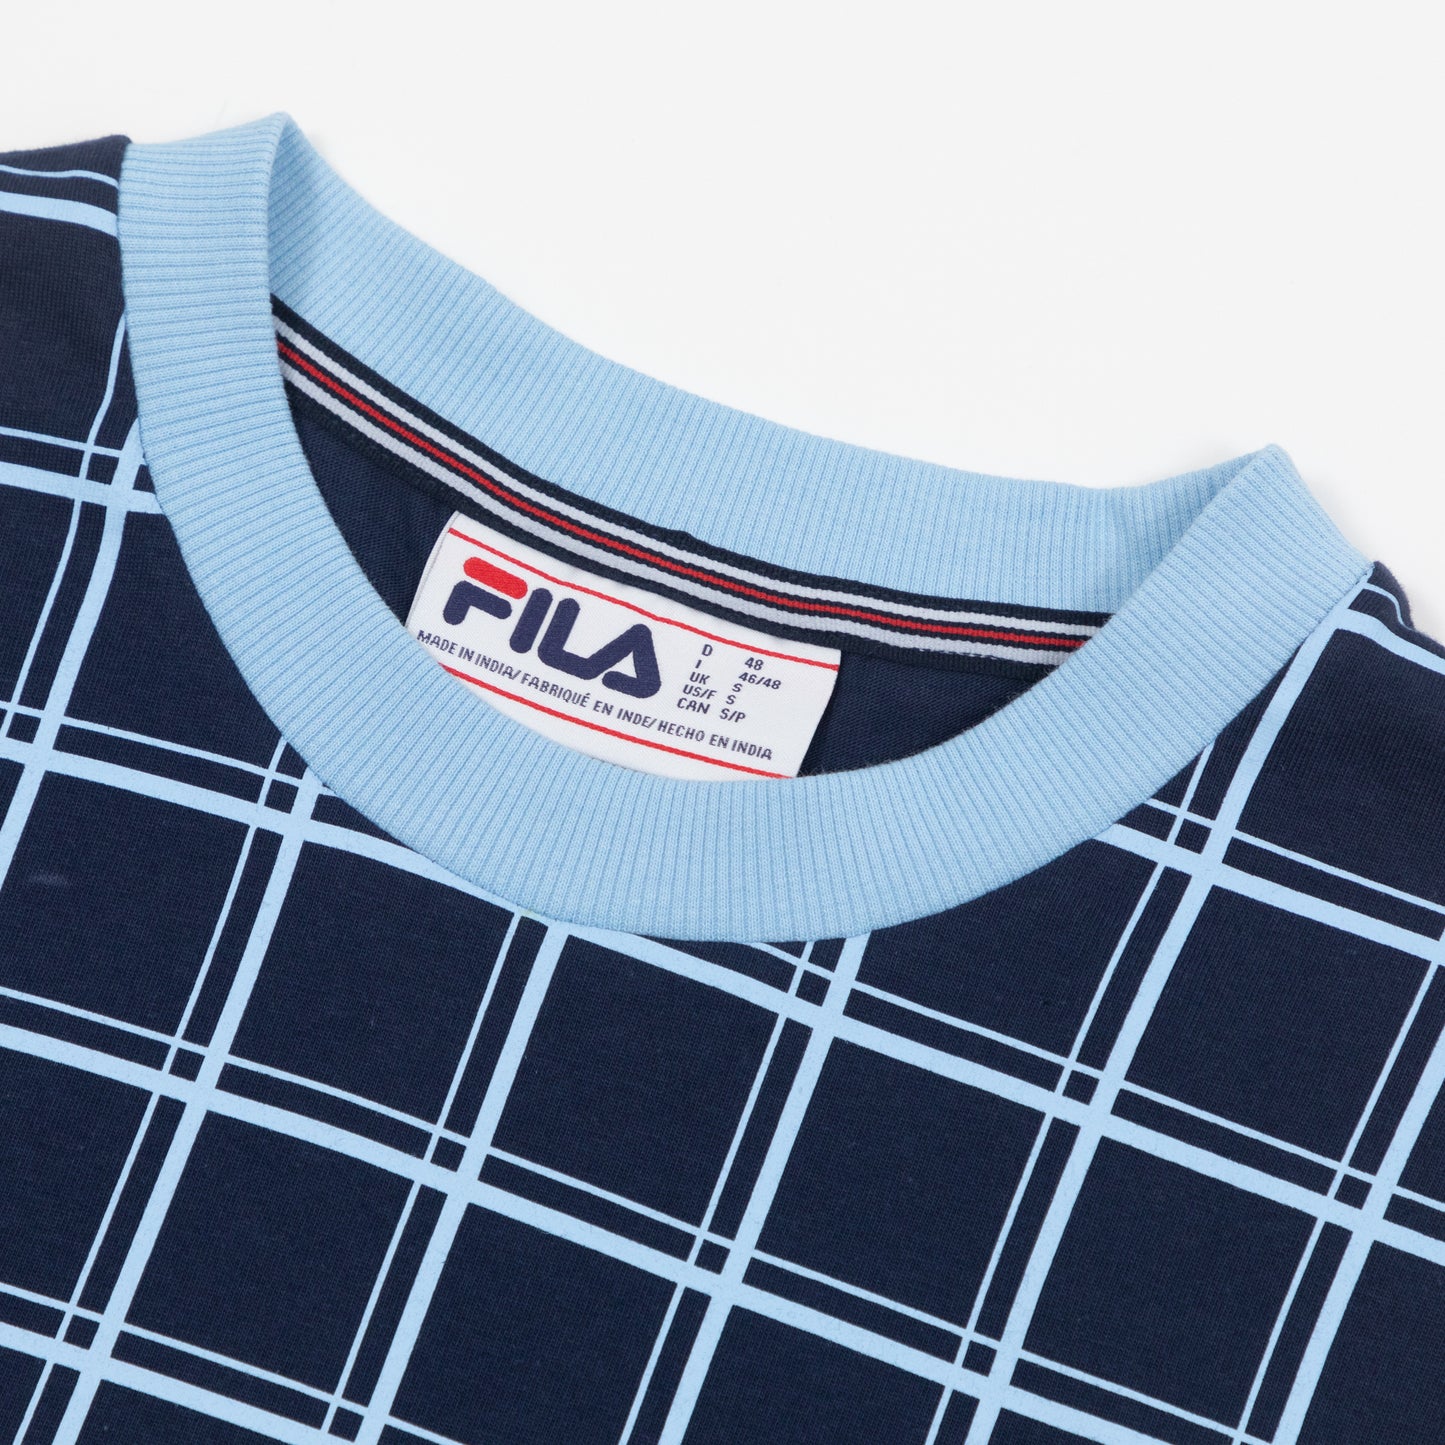 FILA Check Graphic T-Shirt in BLUE & WHITE